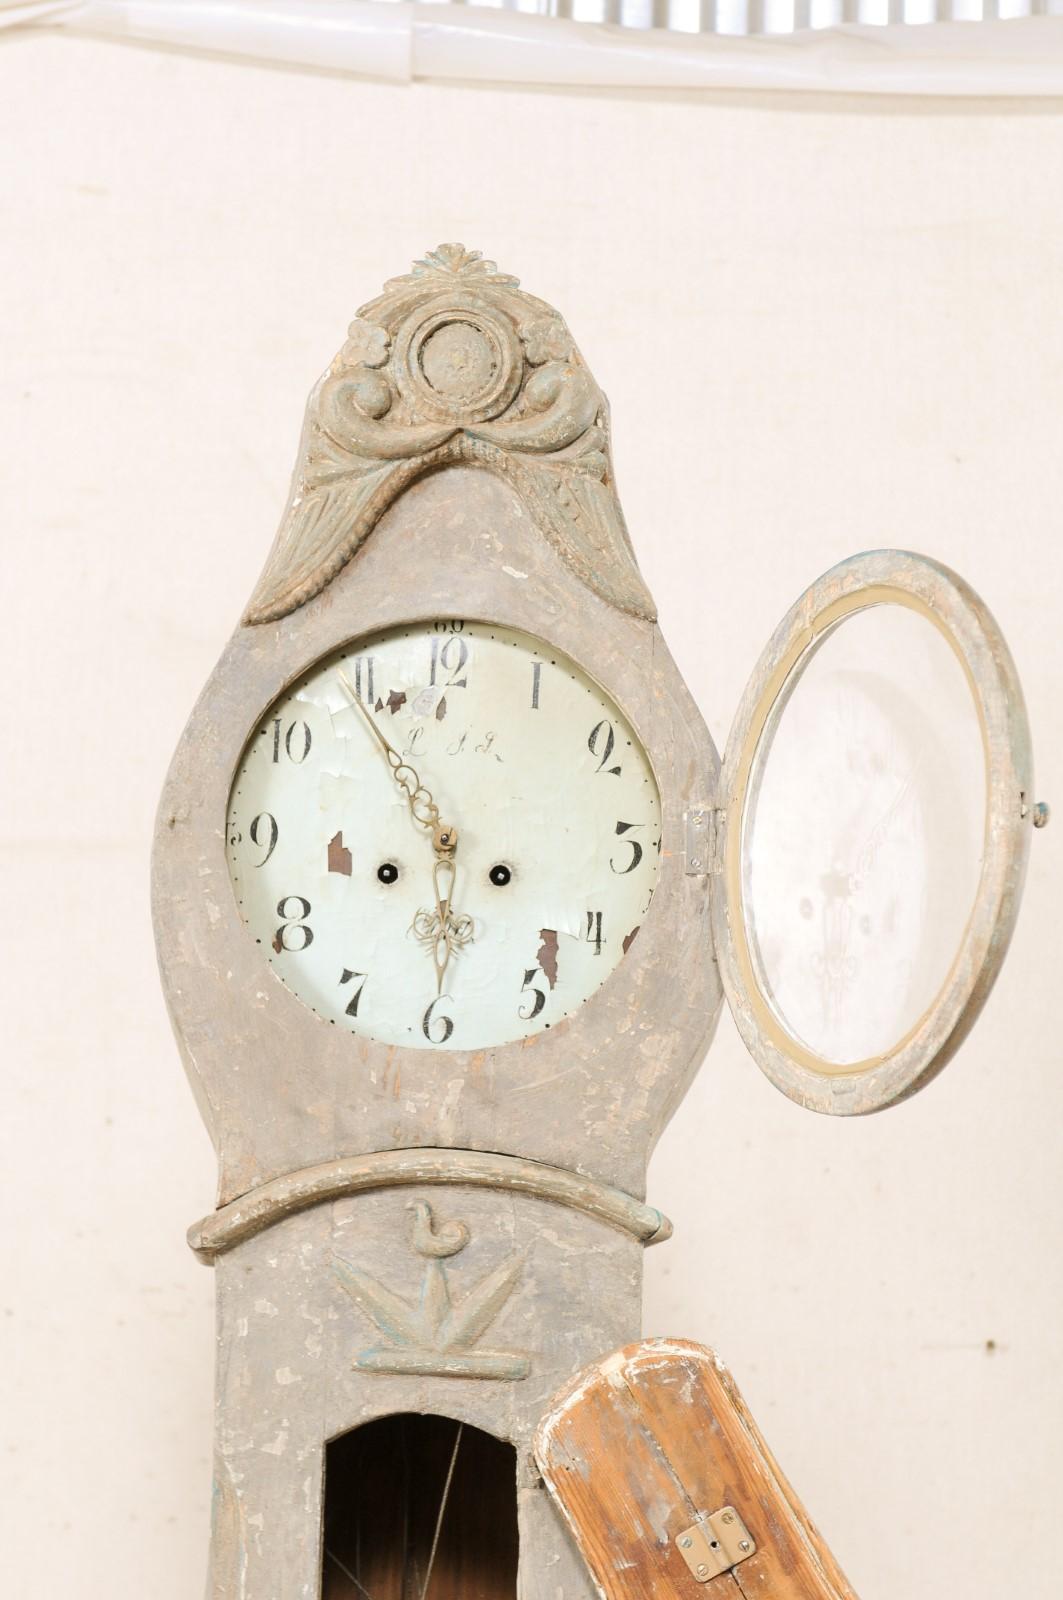 Horloge de parquet du nord de la Suède avec de jolis accents sculptés:: début du 19e siècle Bon état - En vente à Atlanta, GA